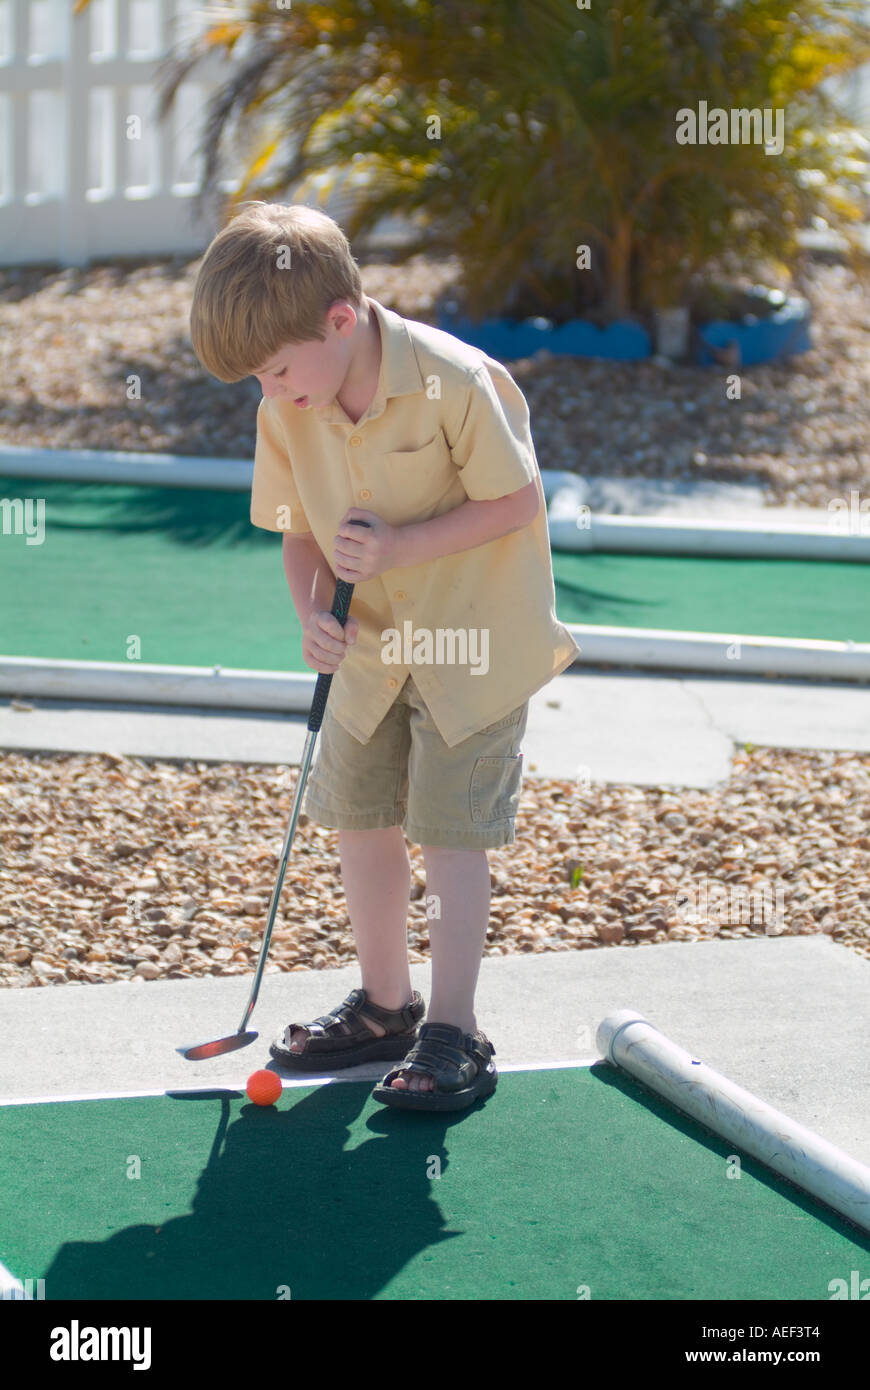 boy playing miniature golf child children course coordination skills golfing Stock Photo